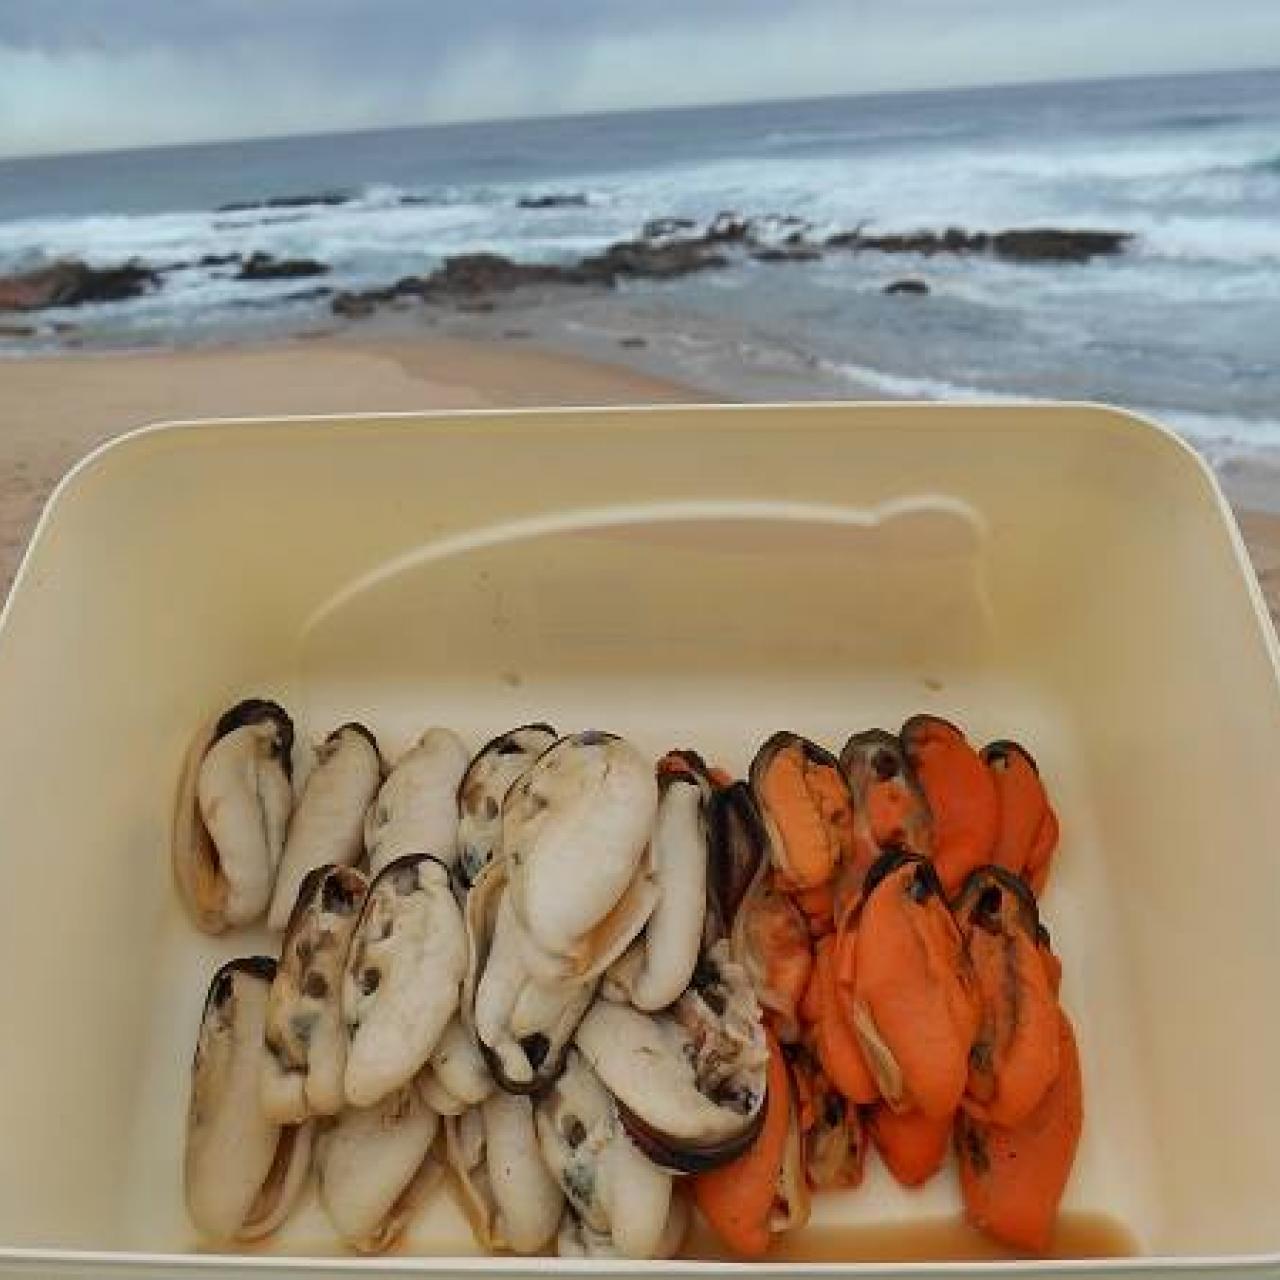 Male mussel is white, female is orange (Photo: Glen Phillips)